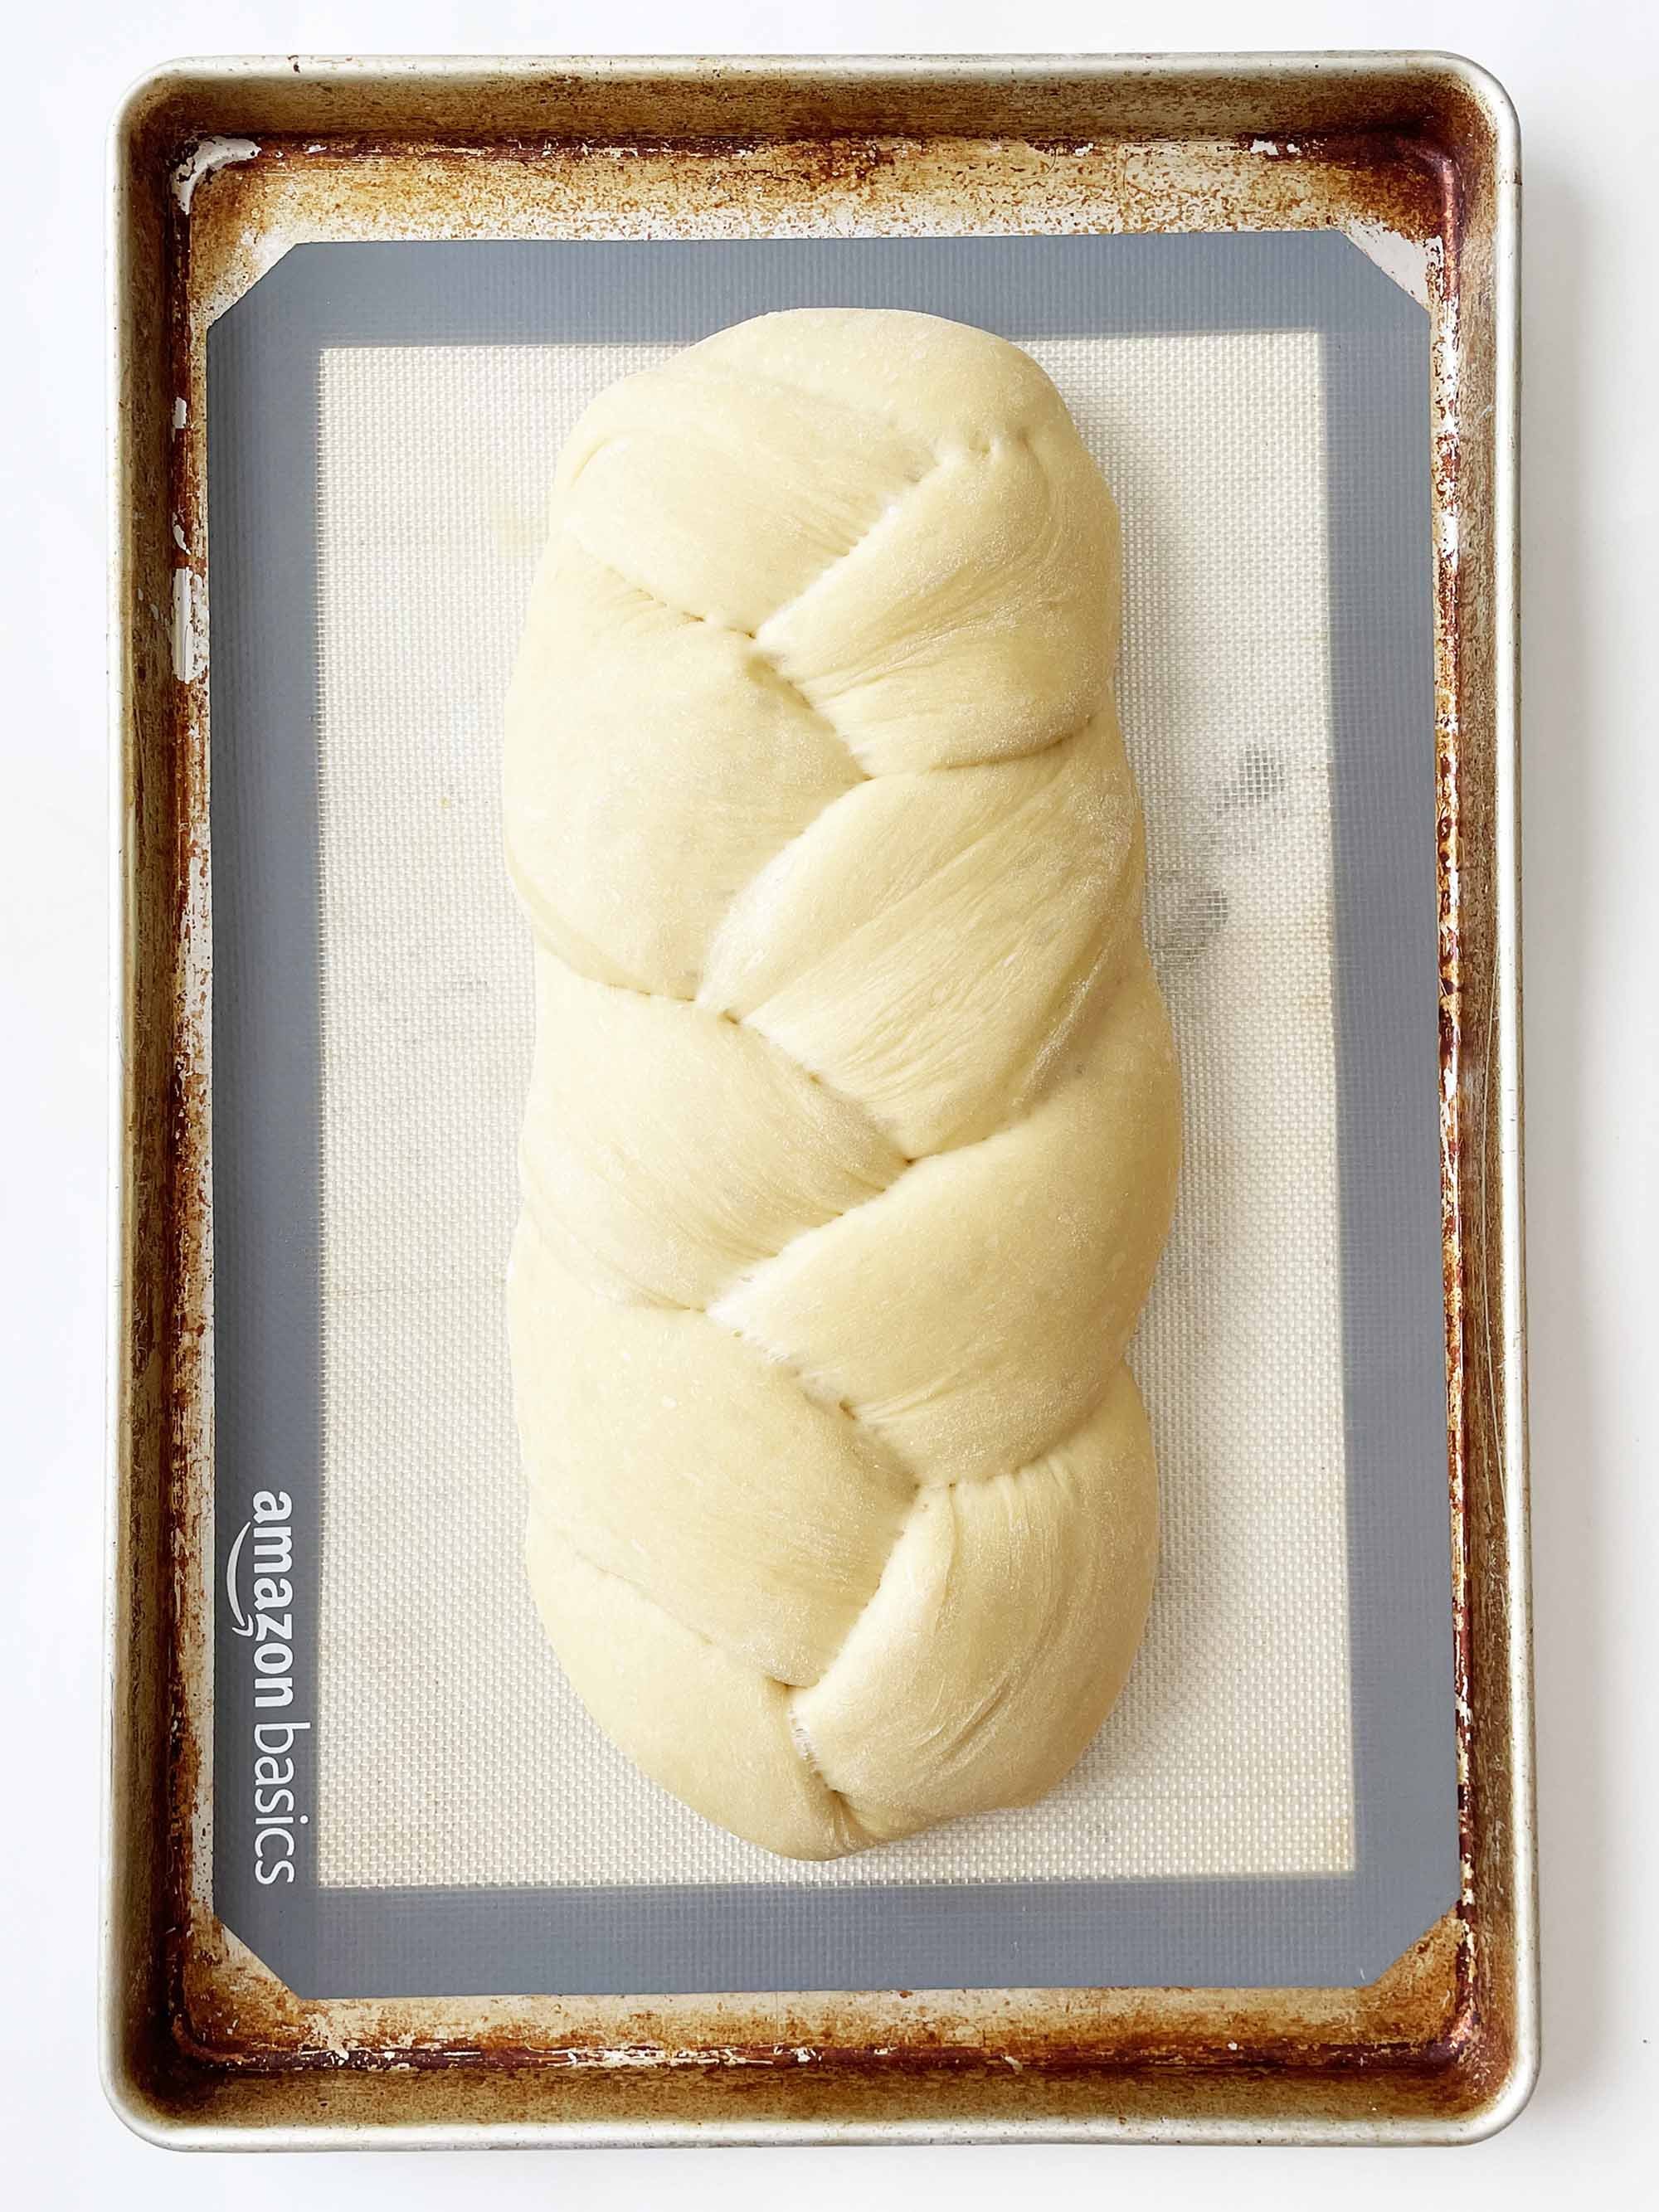 bread-machine-challah9.jpg